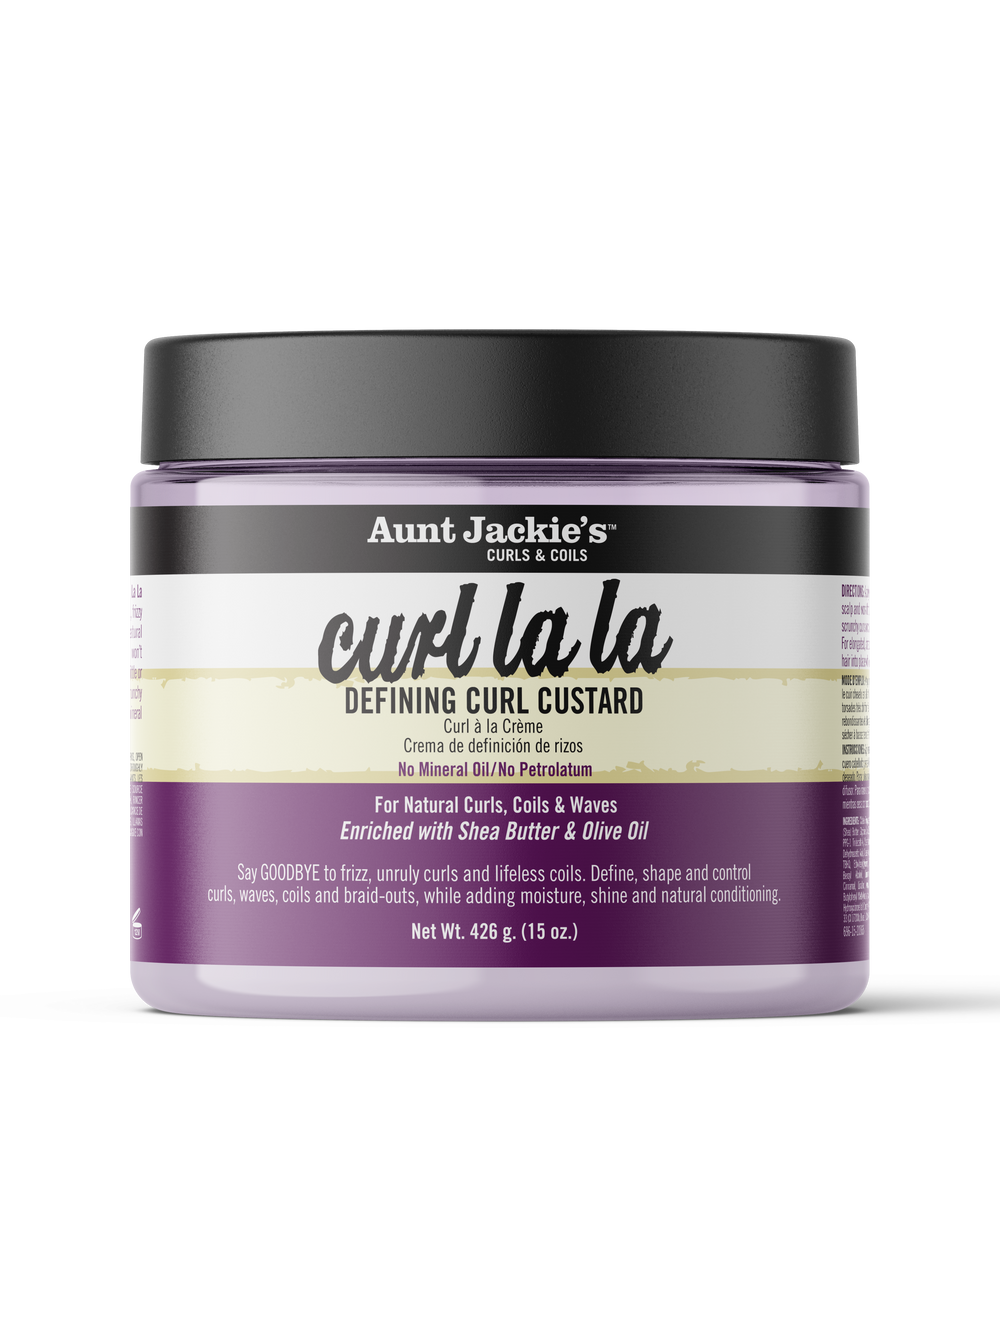 AUNT JACKIE'S Curl La La Defining Curl Custard Cream (15oz)